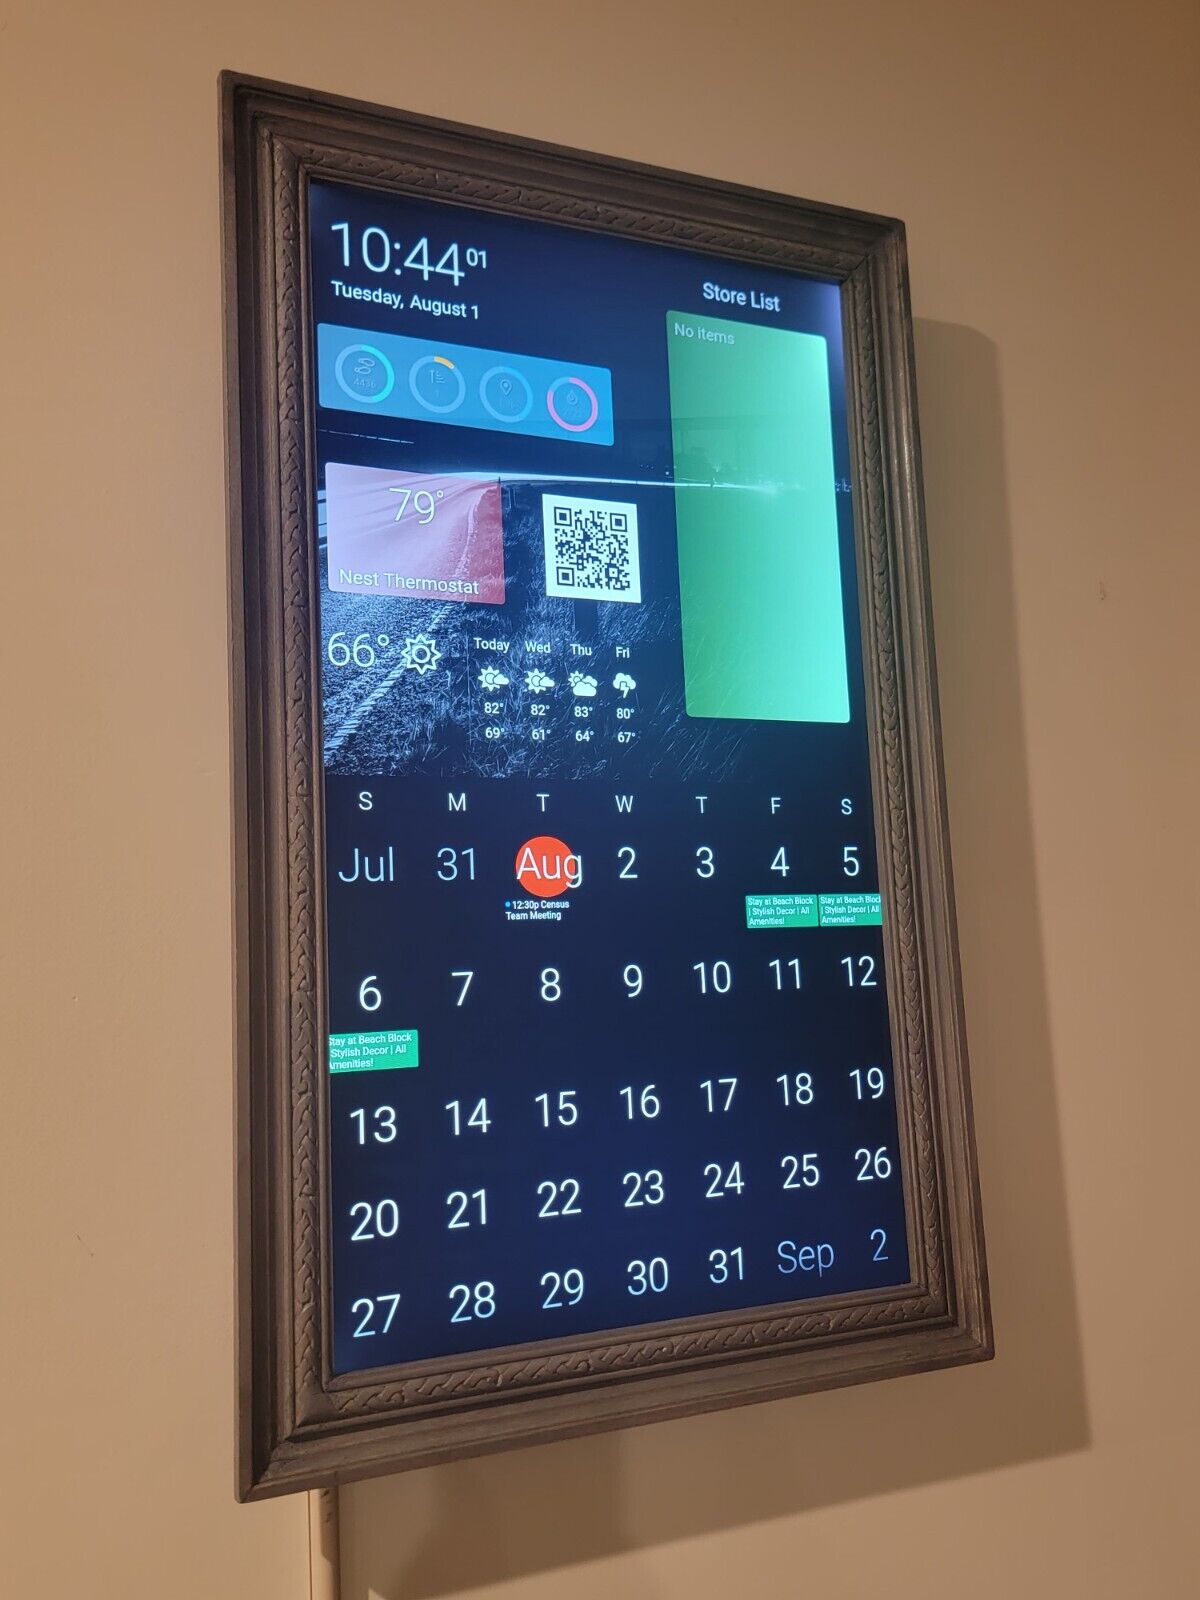 Digital Wall Display and Calendar Frame